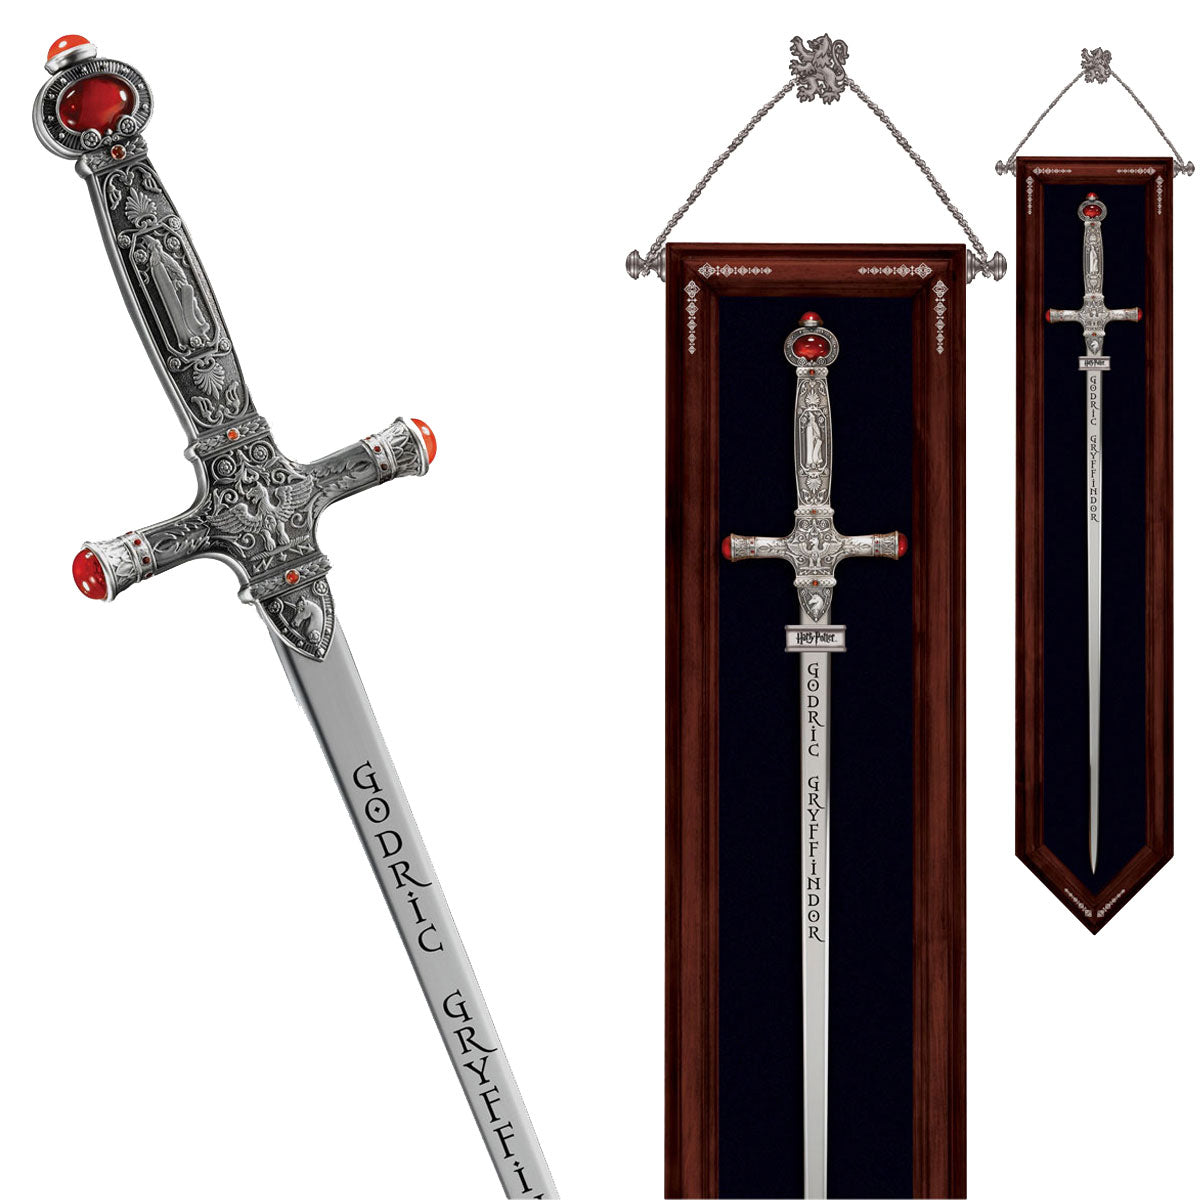 The Sword of Godric Gryffindor